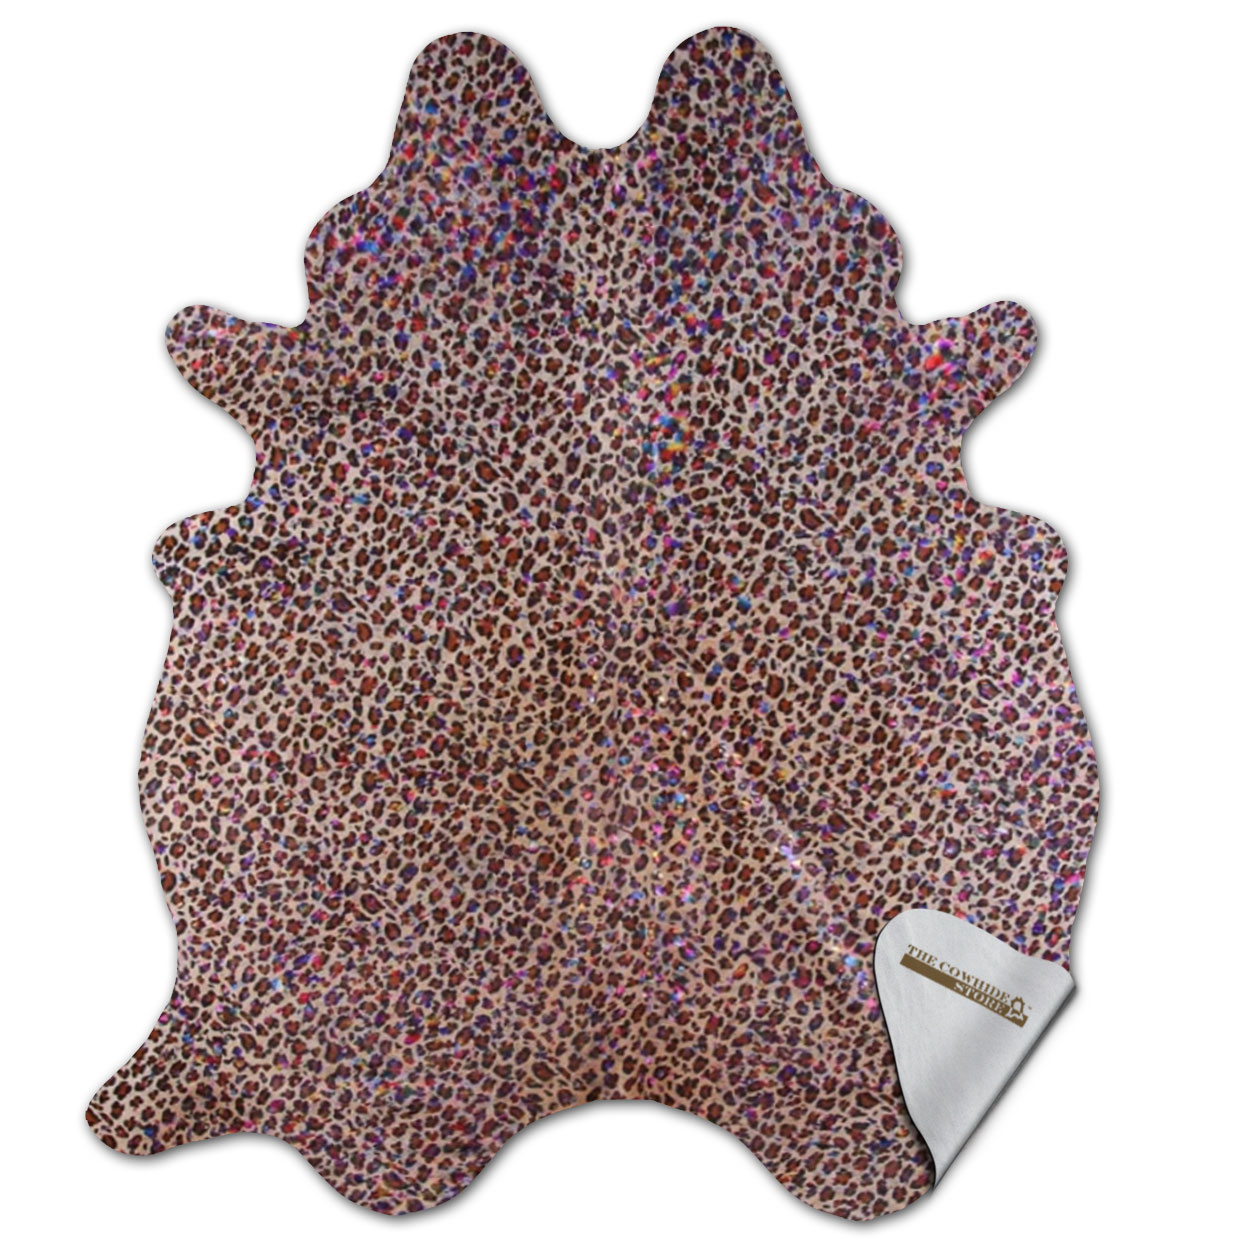 328376 - Printed Devore Colorful Confetti on Leopard on Tan Cowhide